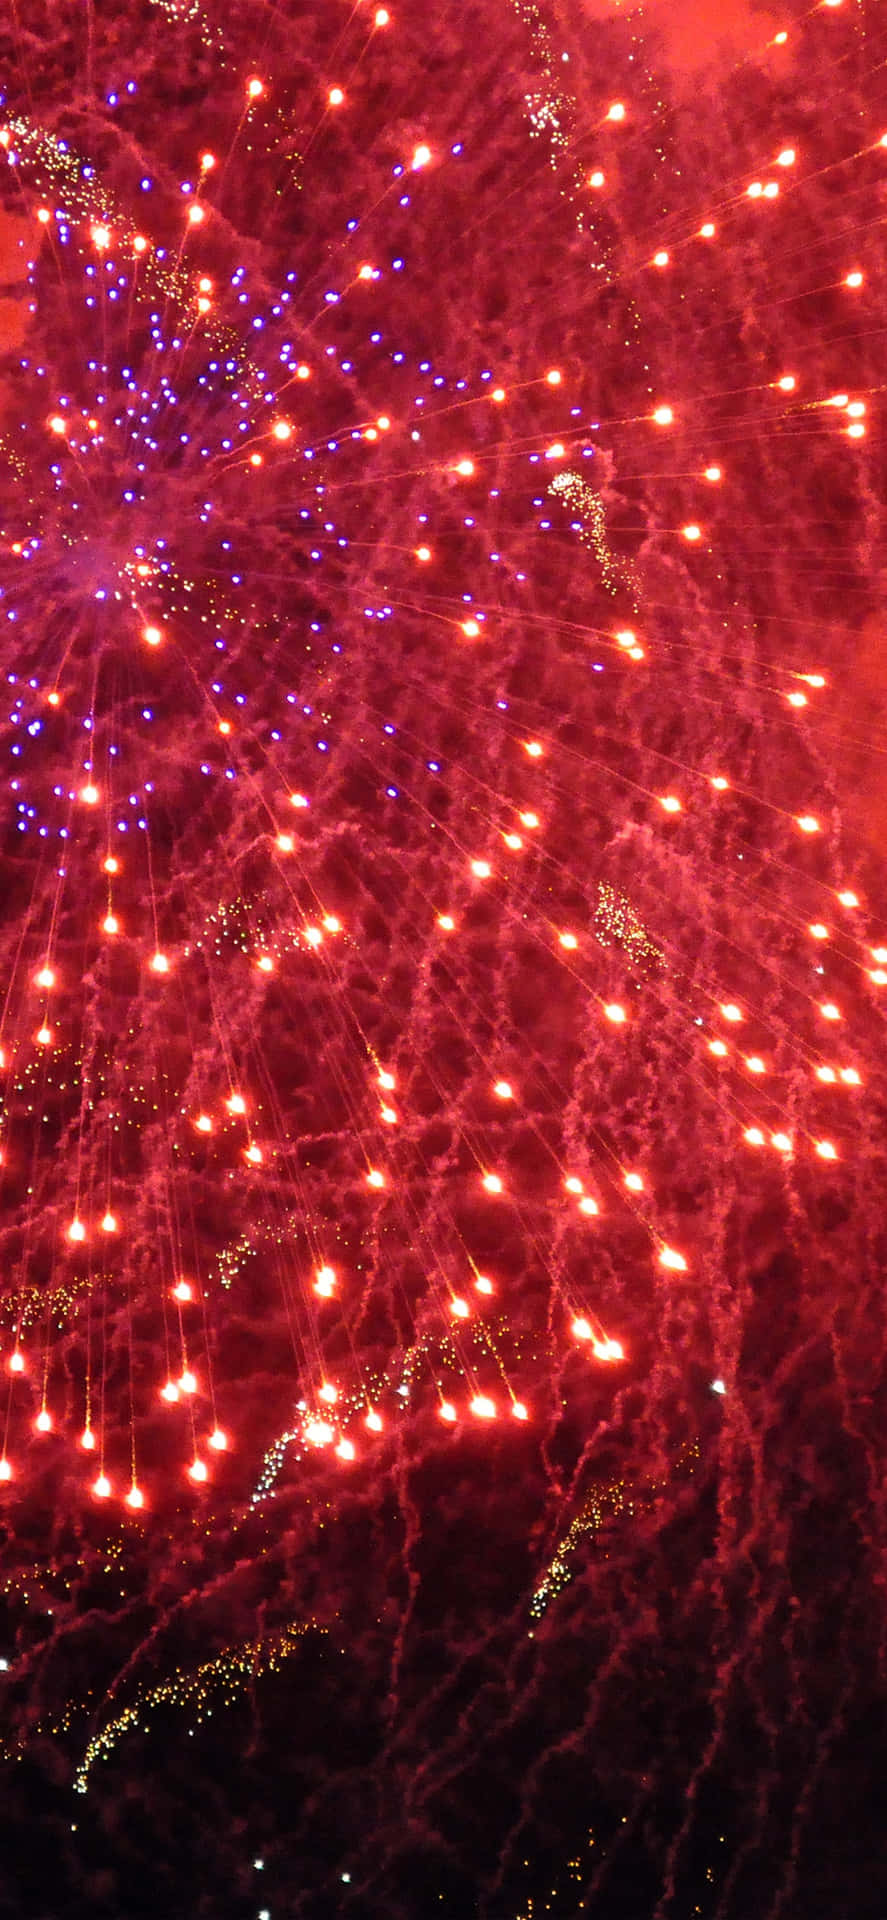 Vibrant Fireworks Display Wallpaper